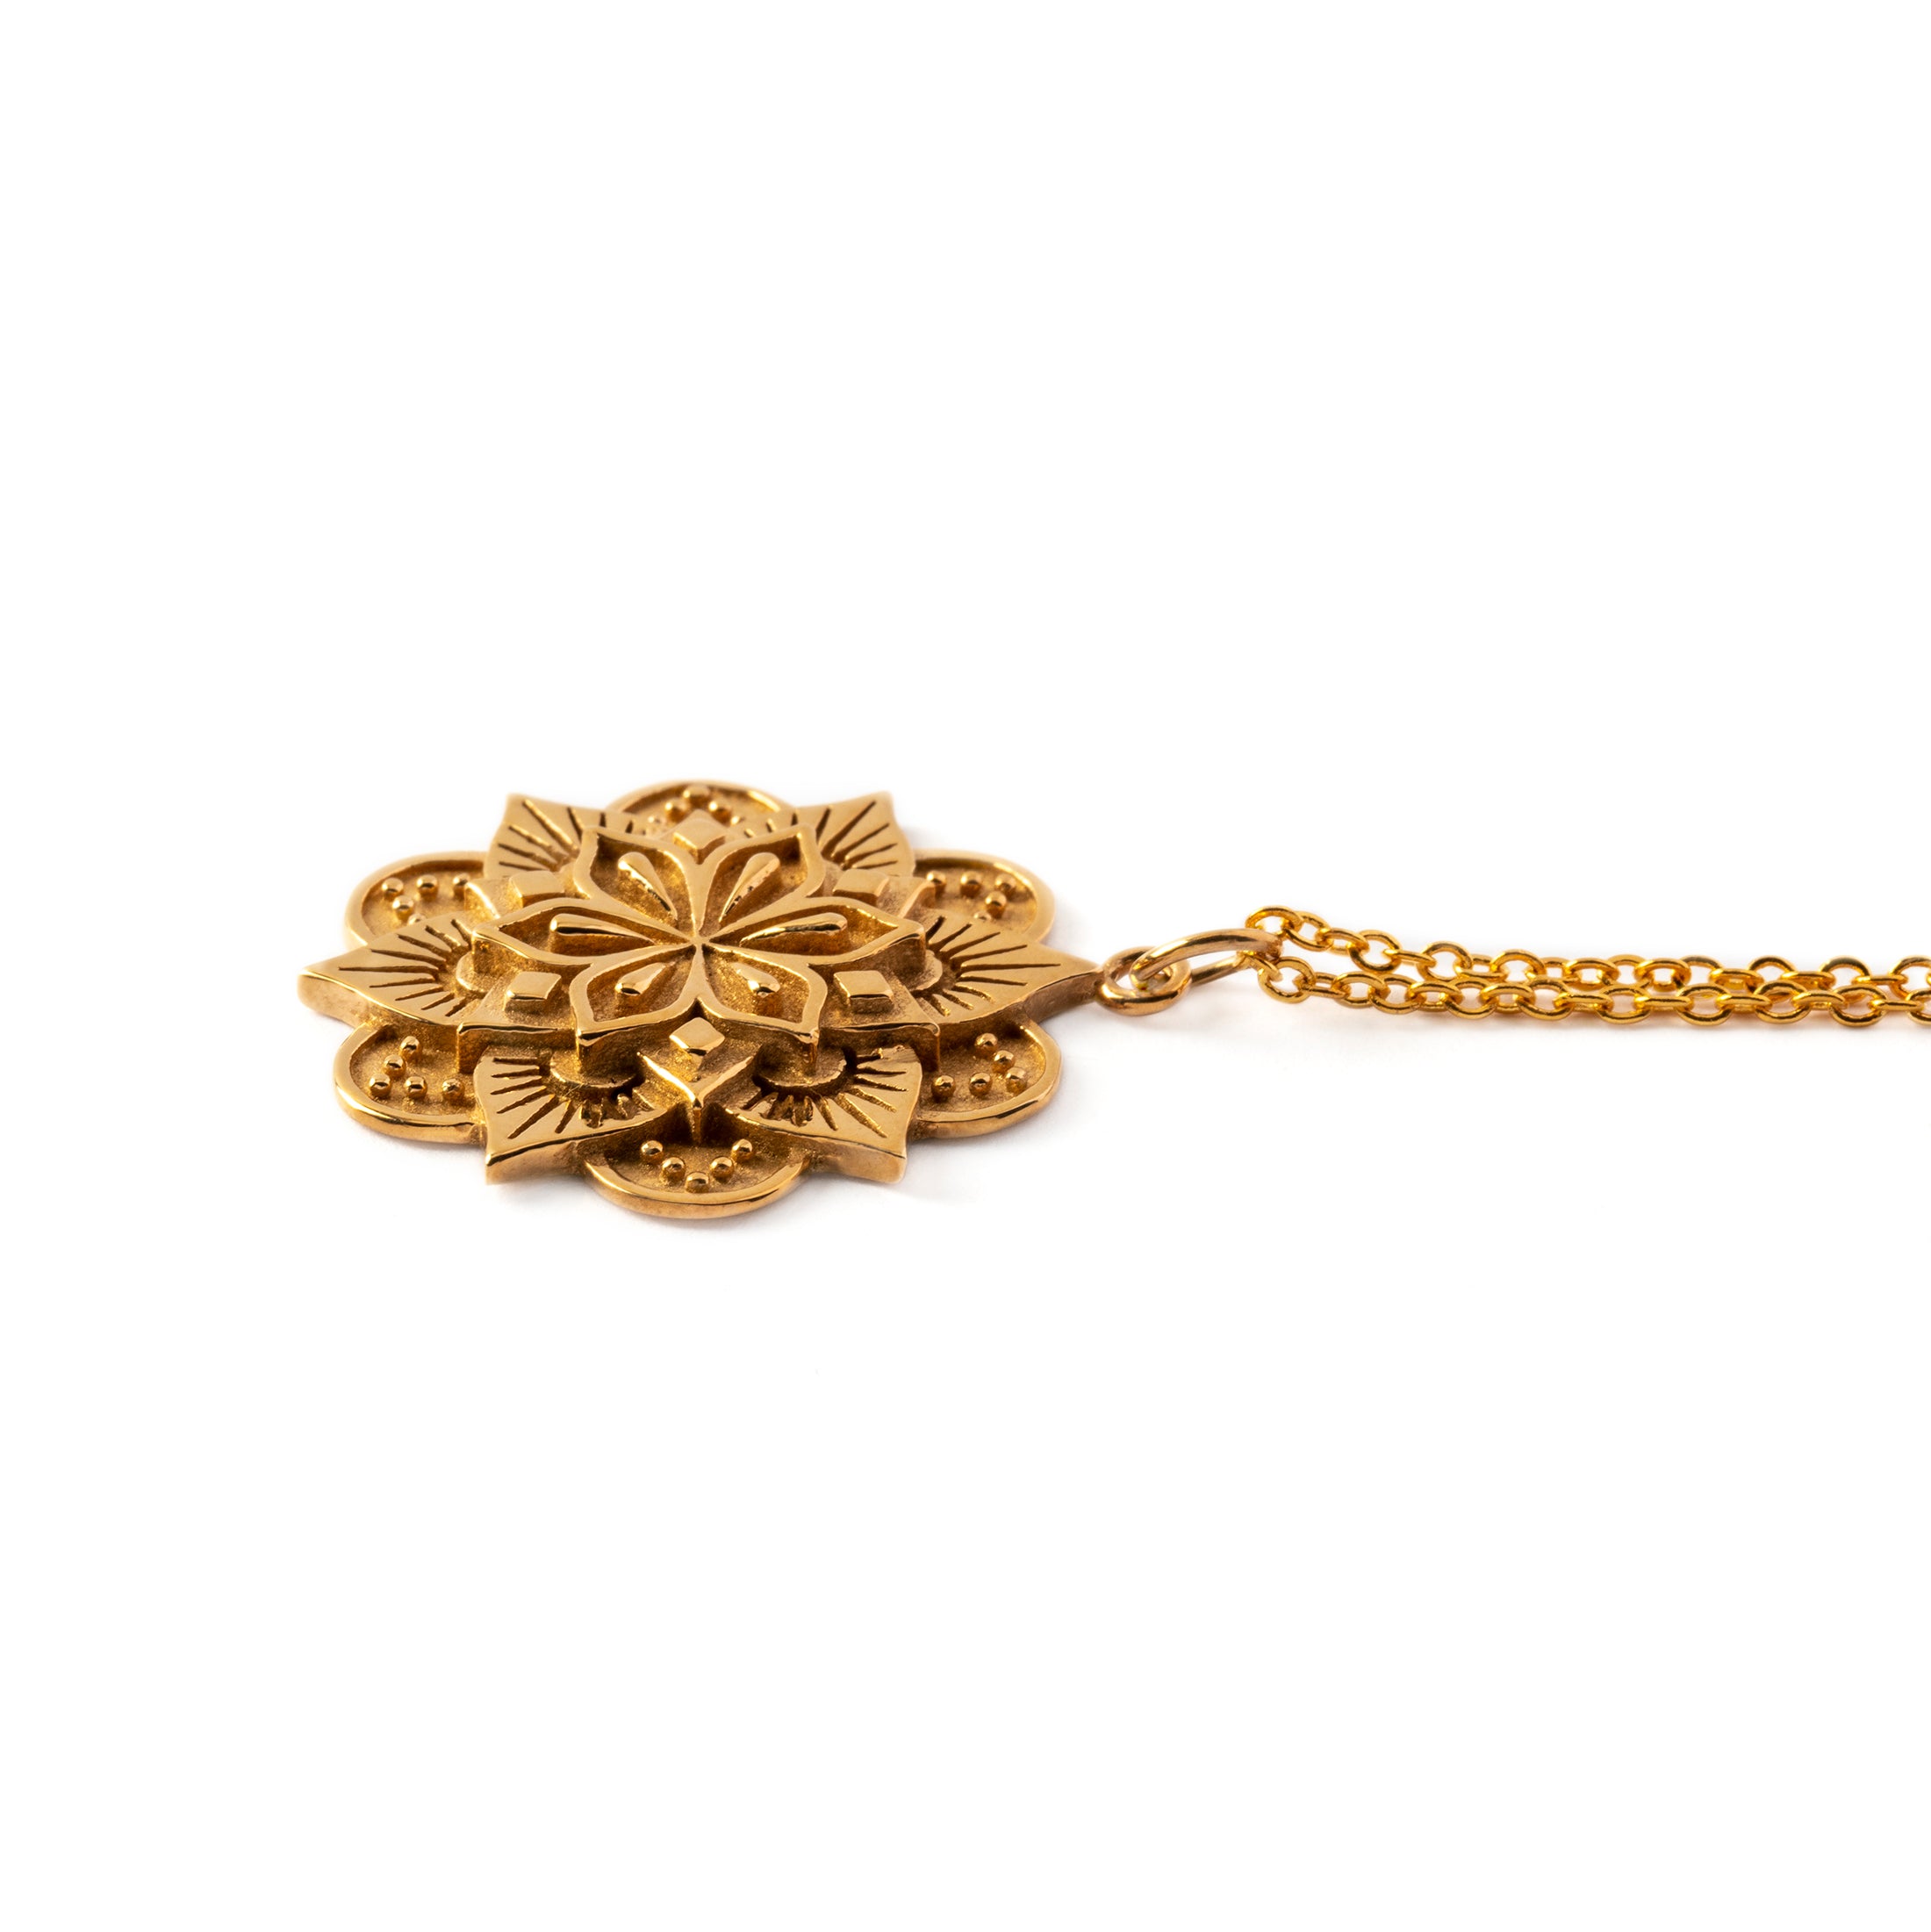 Padma mandala necklace in bronze side view